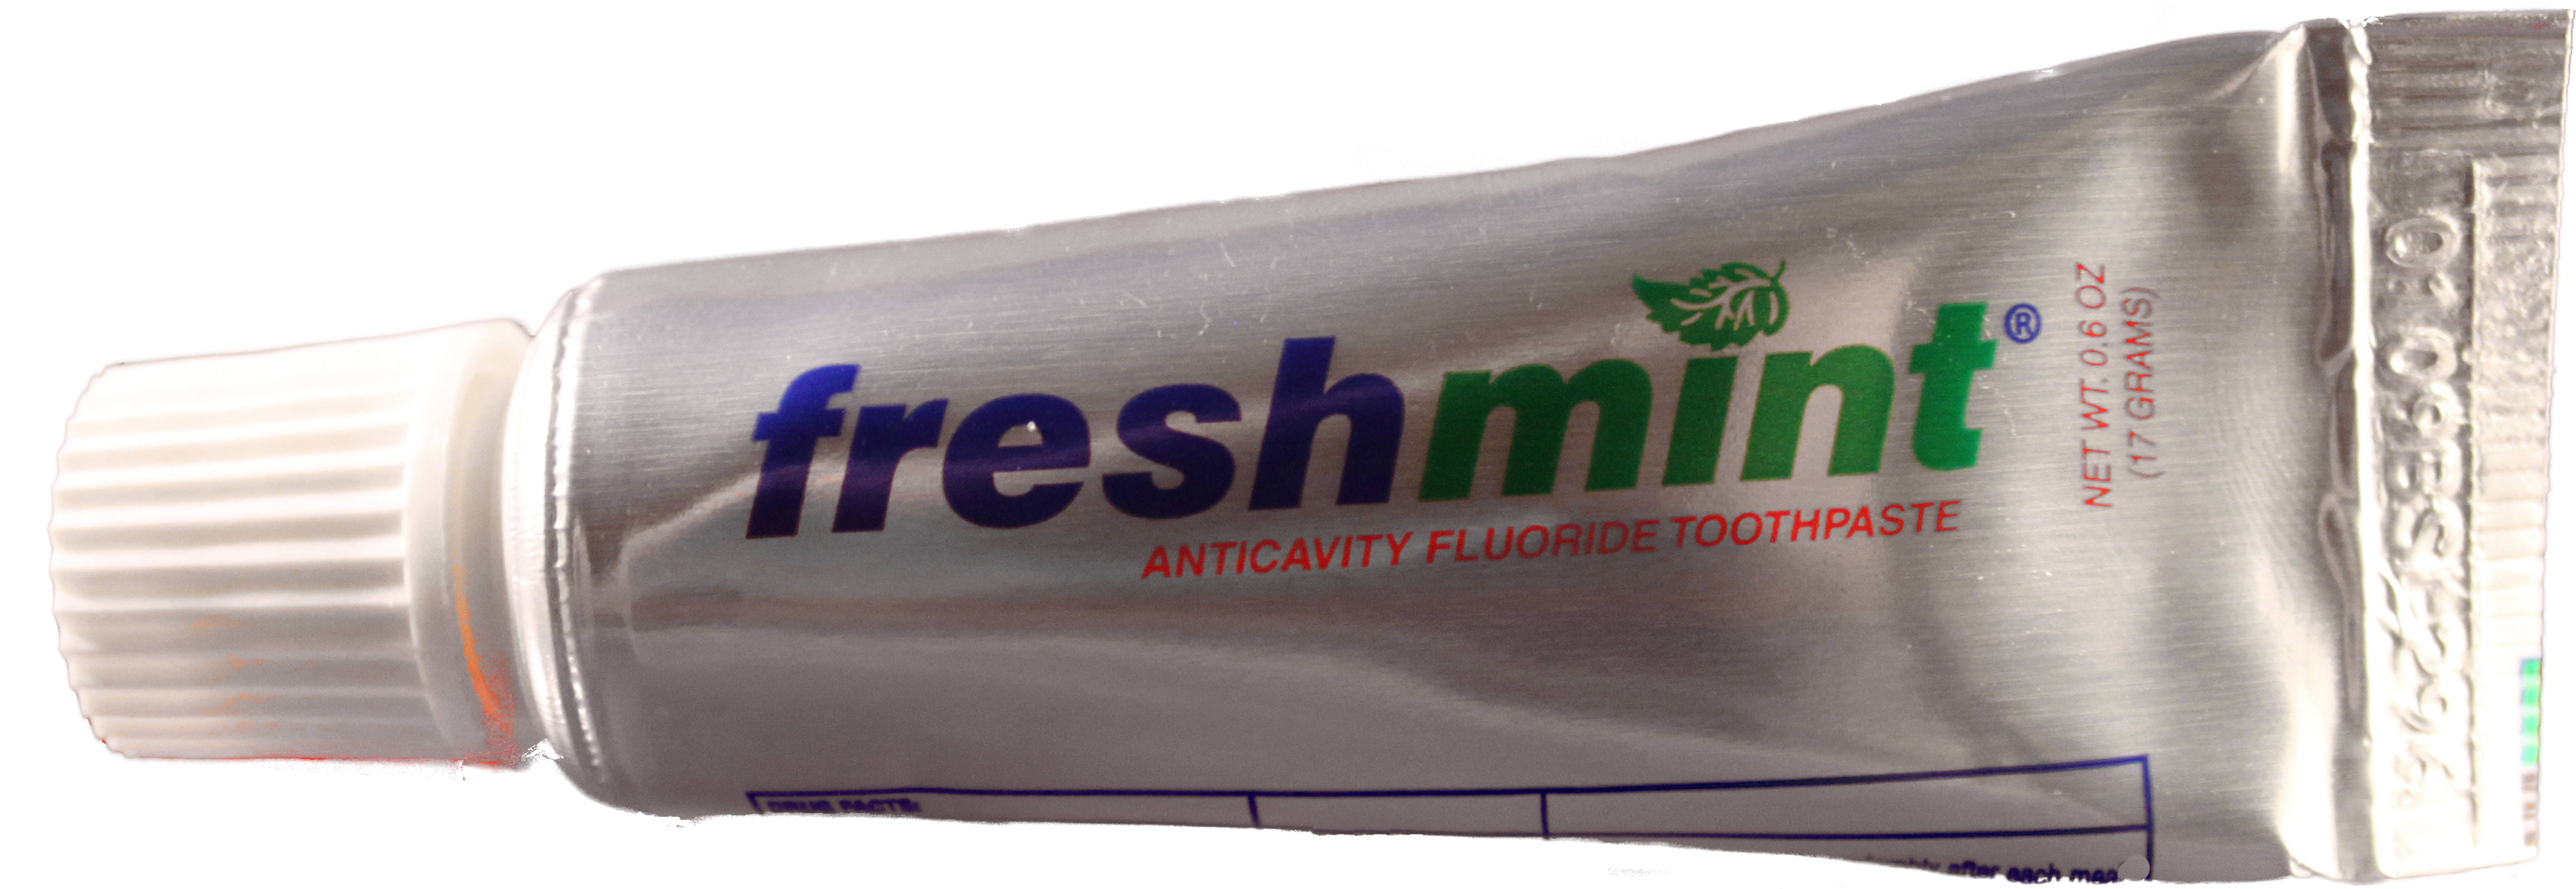 Freshmint 0.6 oz. Anticavity Fluoride TOOTHPASTE